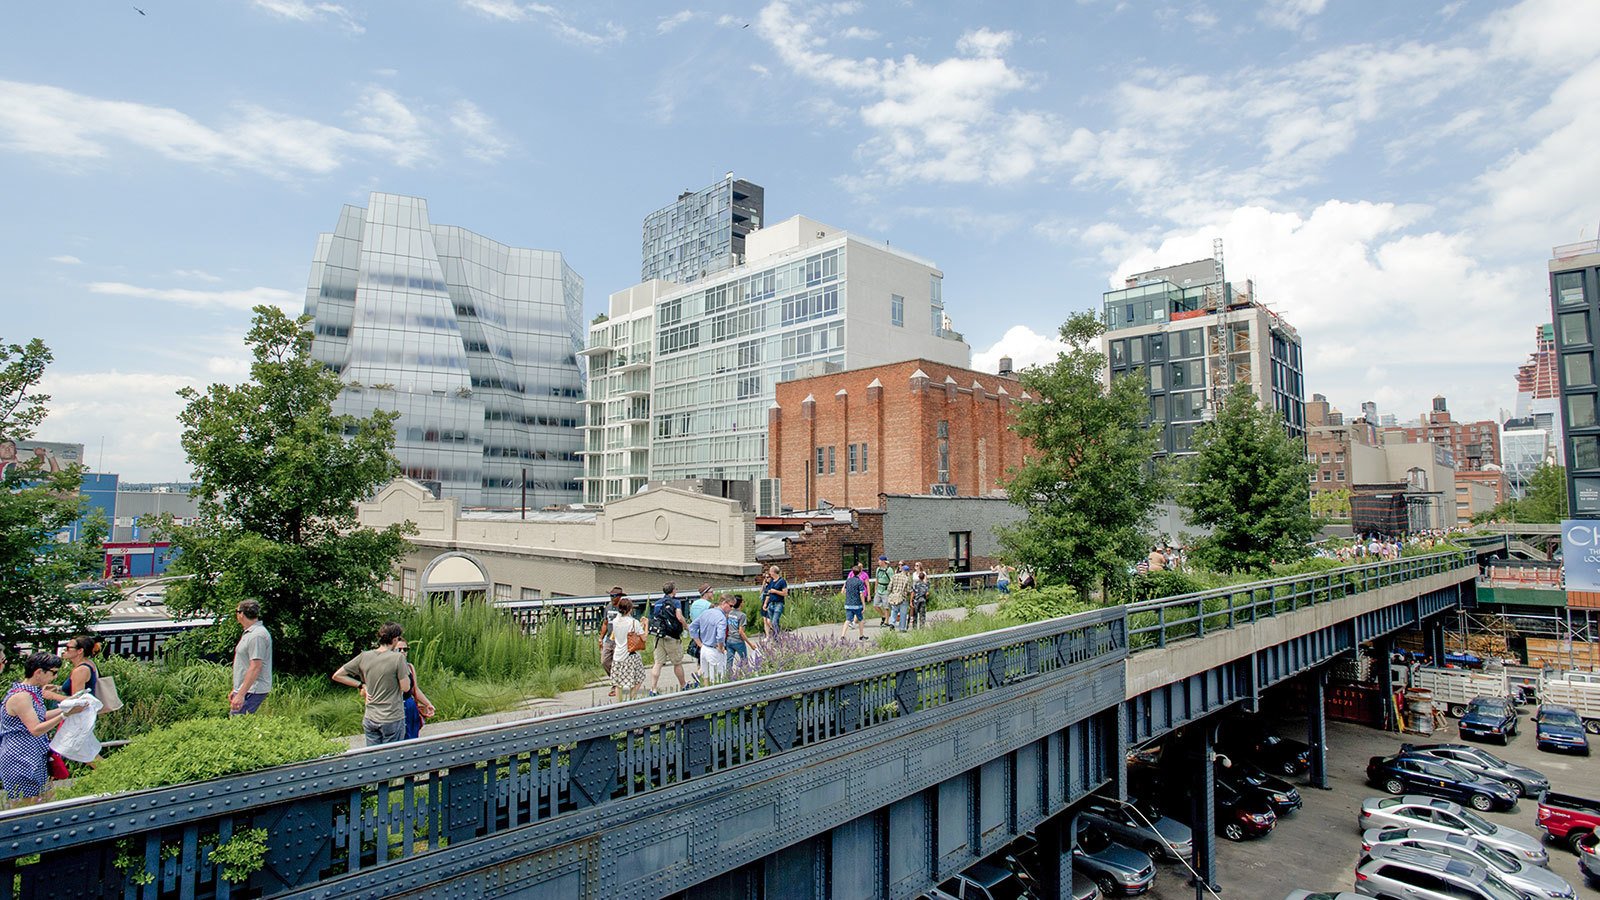 New York City: Secrets Of High Line Park Walking Tour